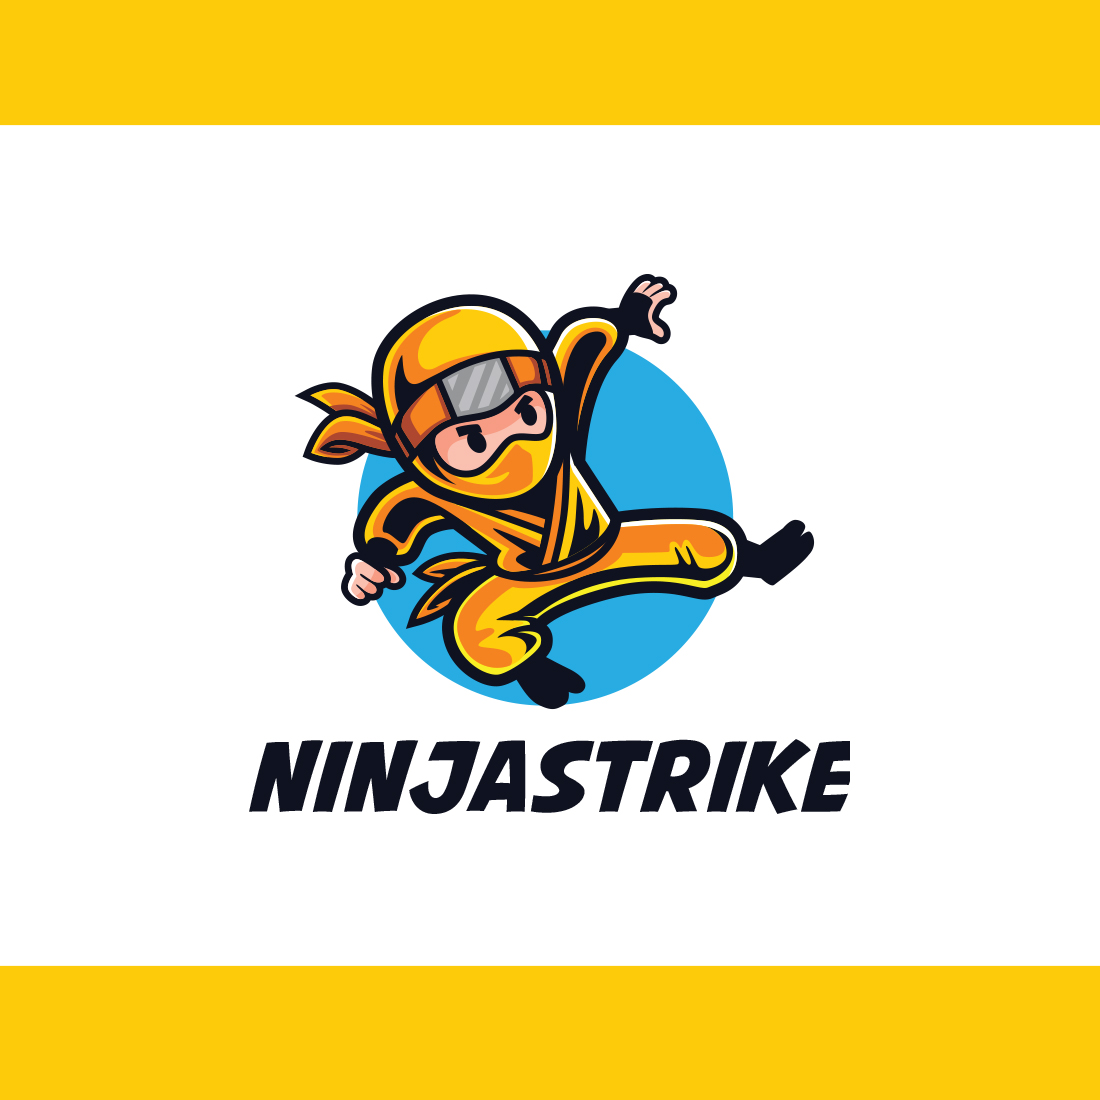 Ninja Strike Cartoon Mascot Logo Design cover image.